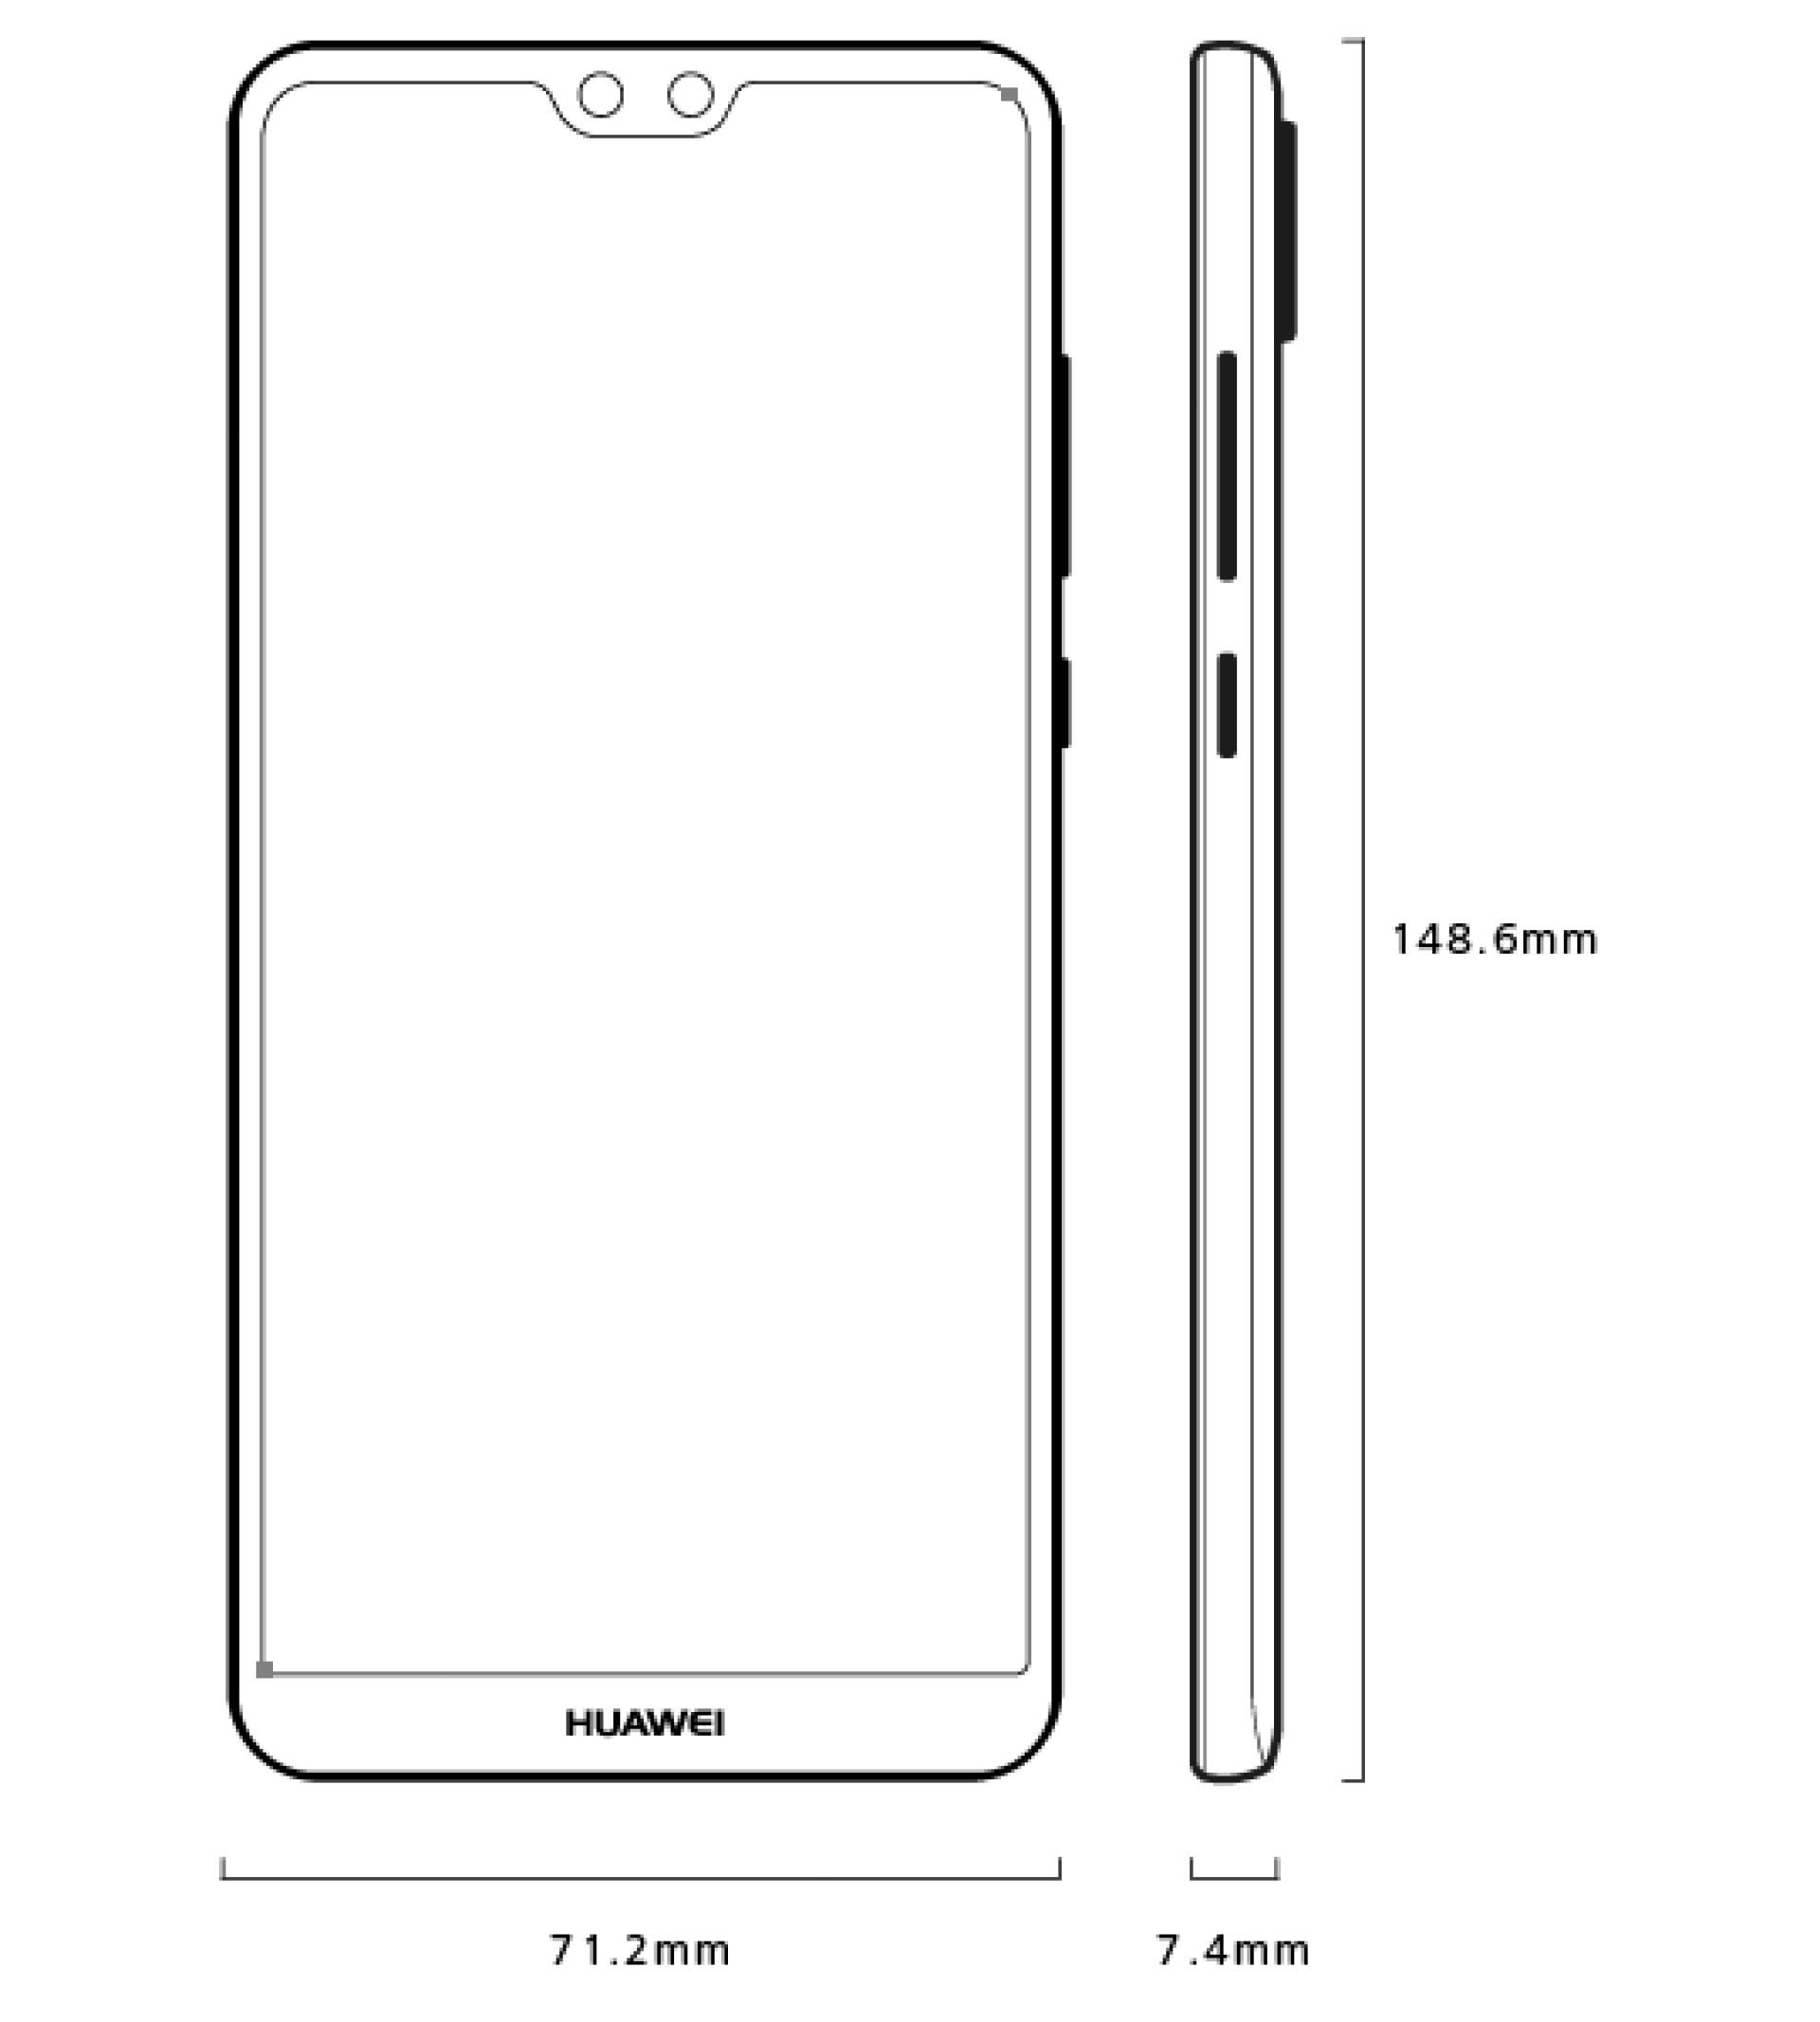 Huawei p20 Lite Размеры. Хуавей п20 Лайт размер дисплея. Размер телефона Хуавей р20 Лайт. Хуавей п 20 Лайт размер экрана.